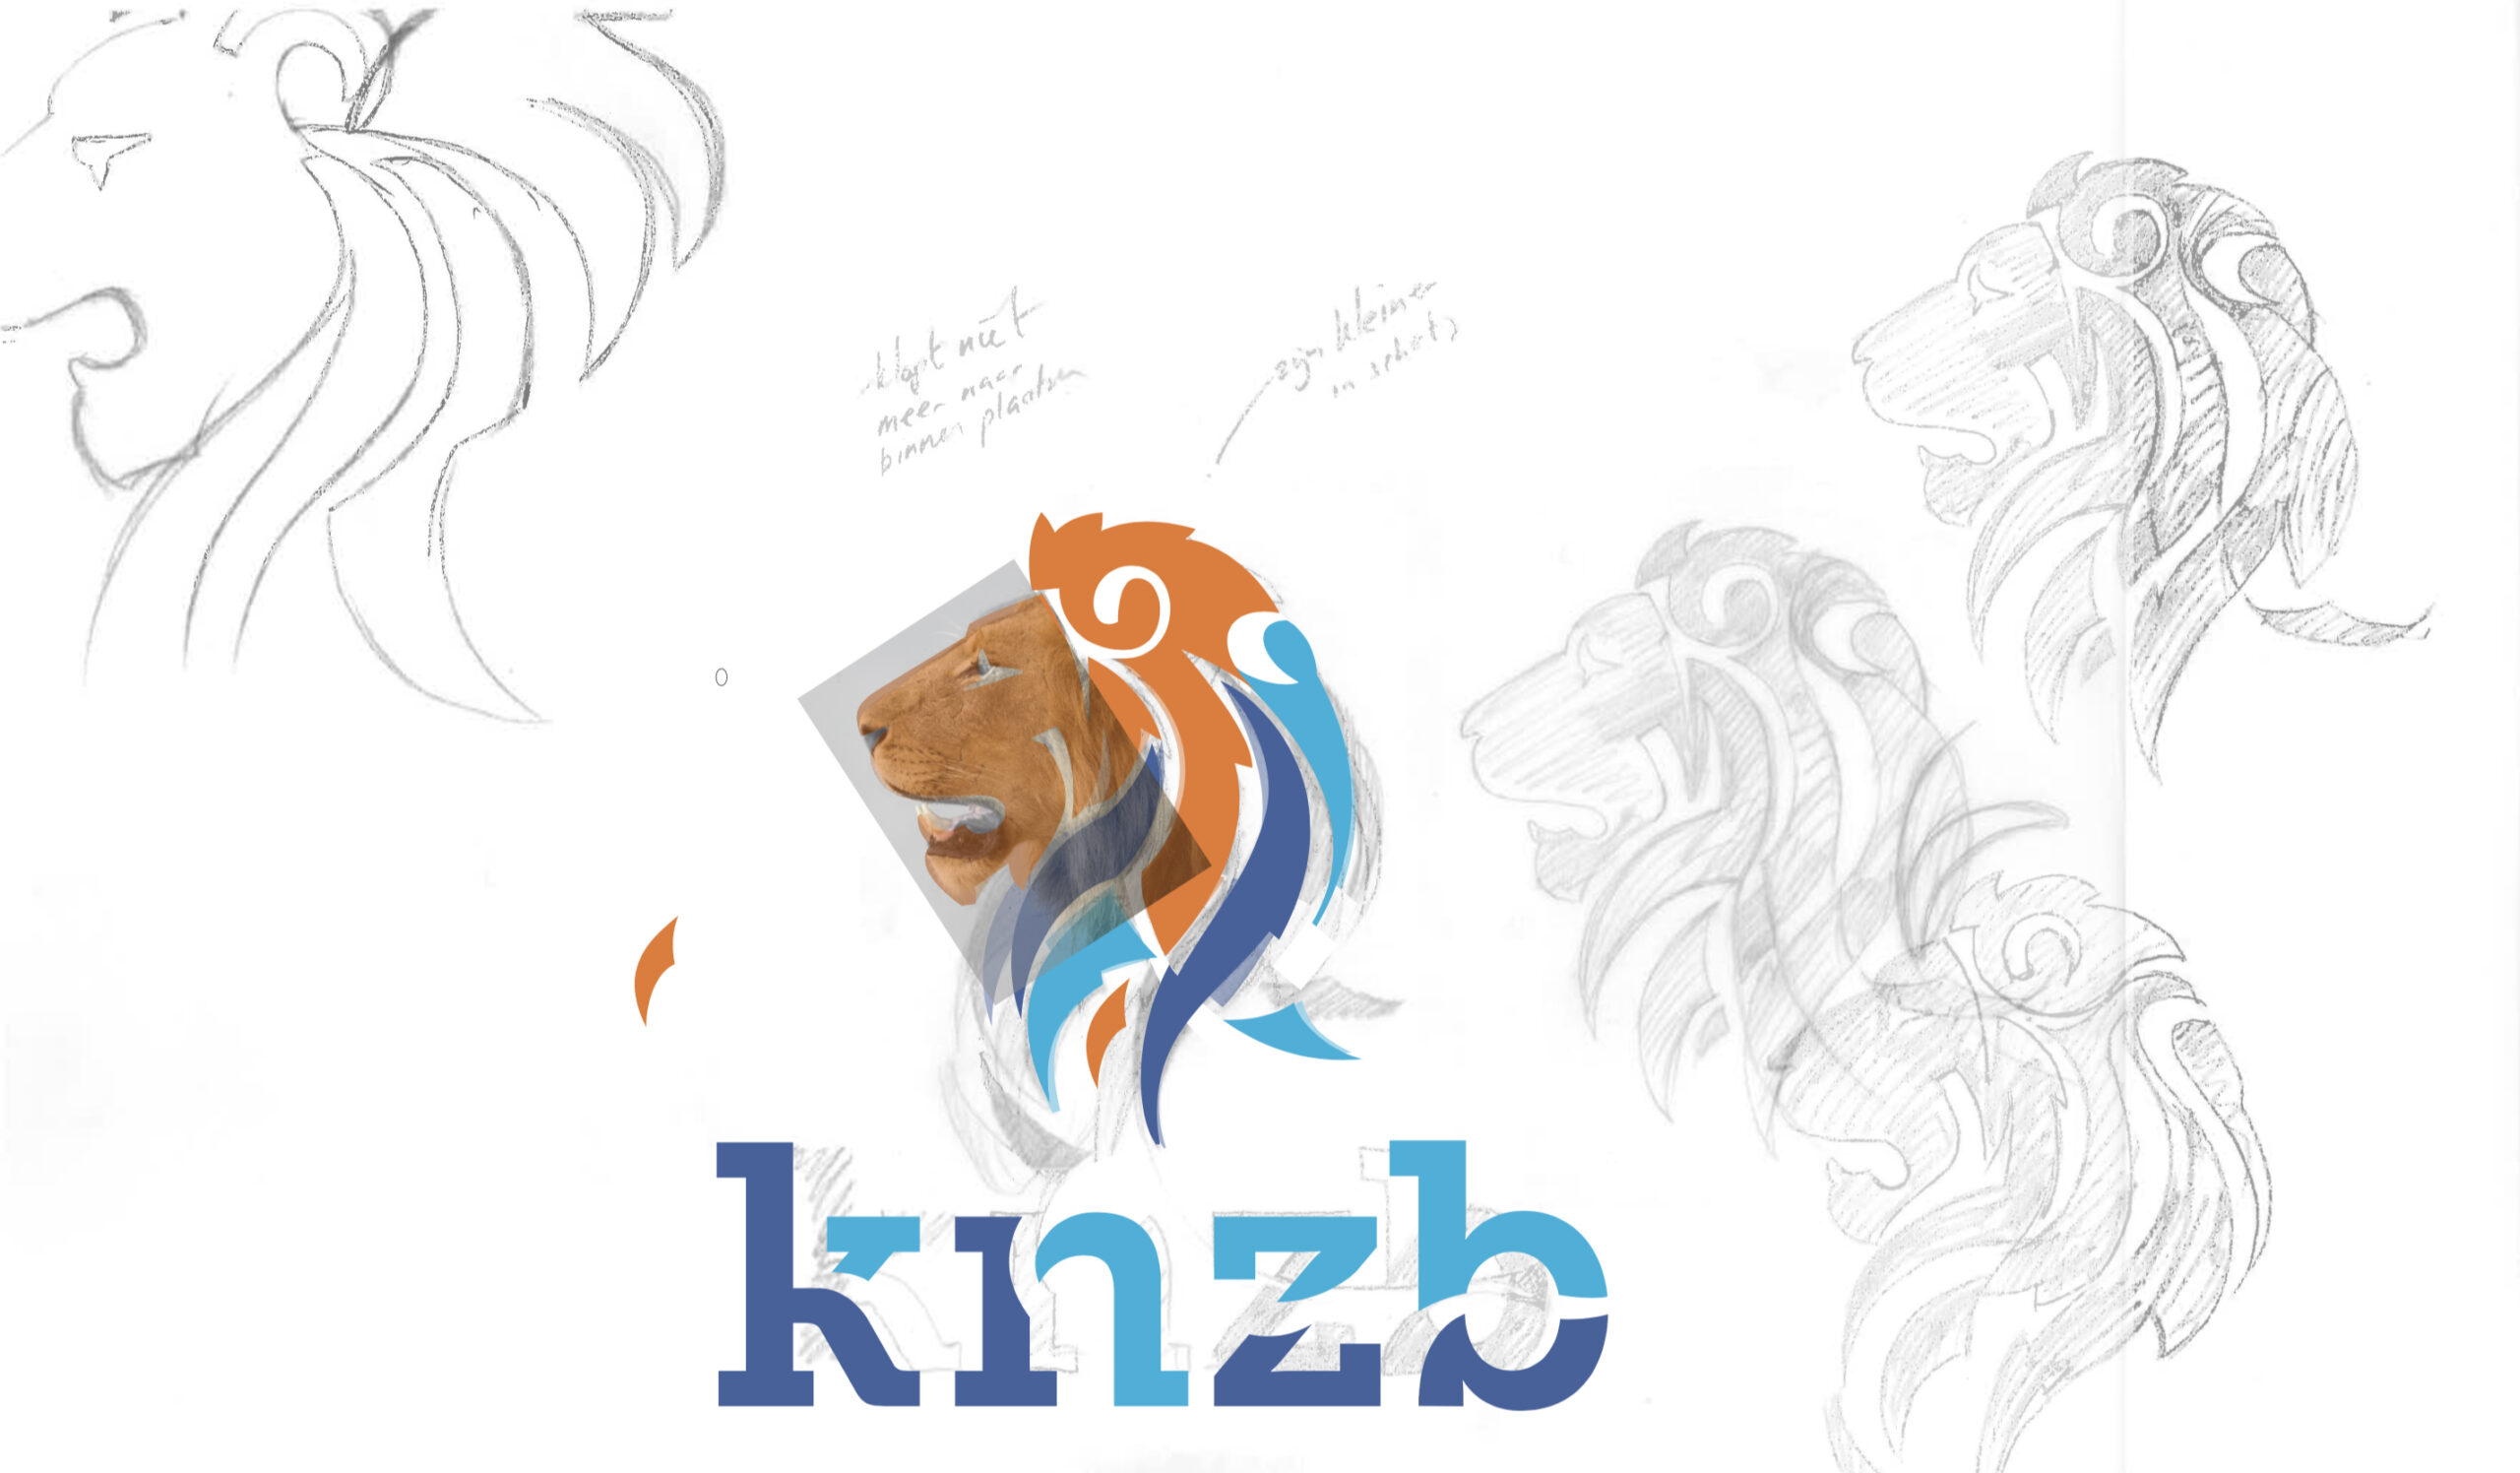 KNZB logo schets